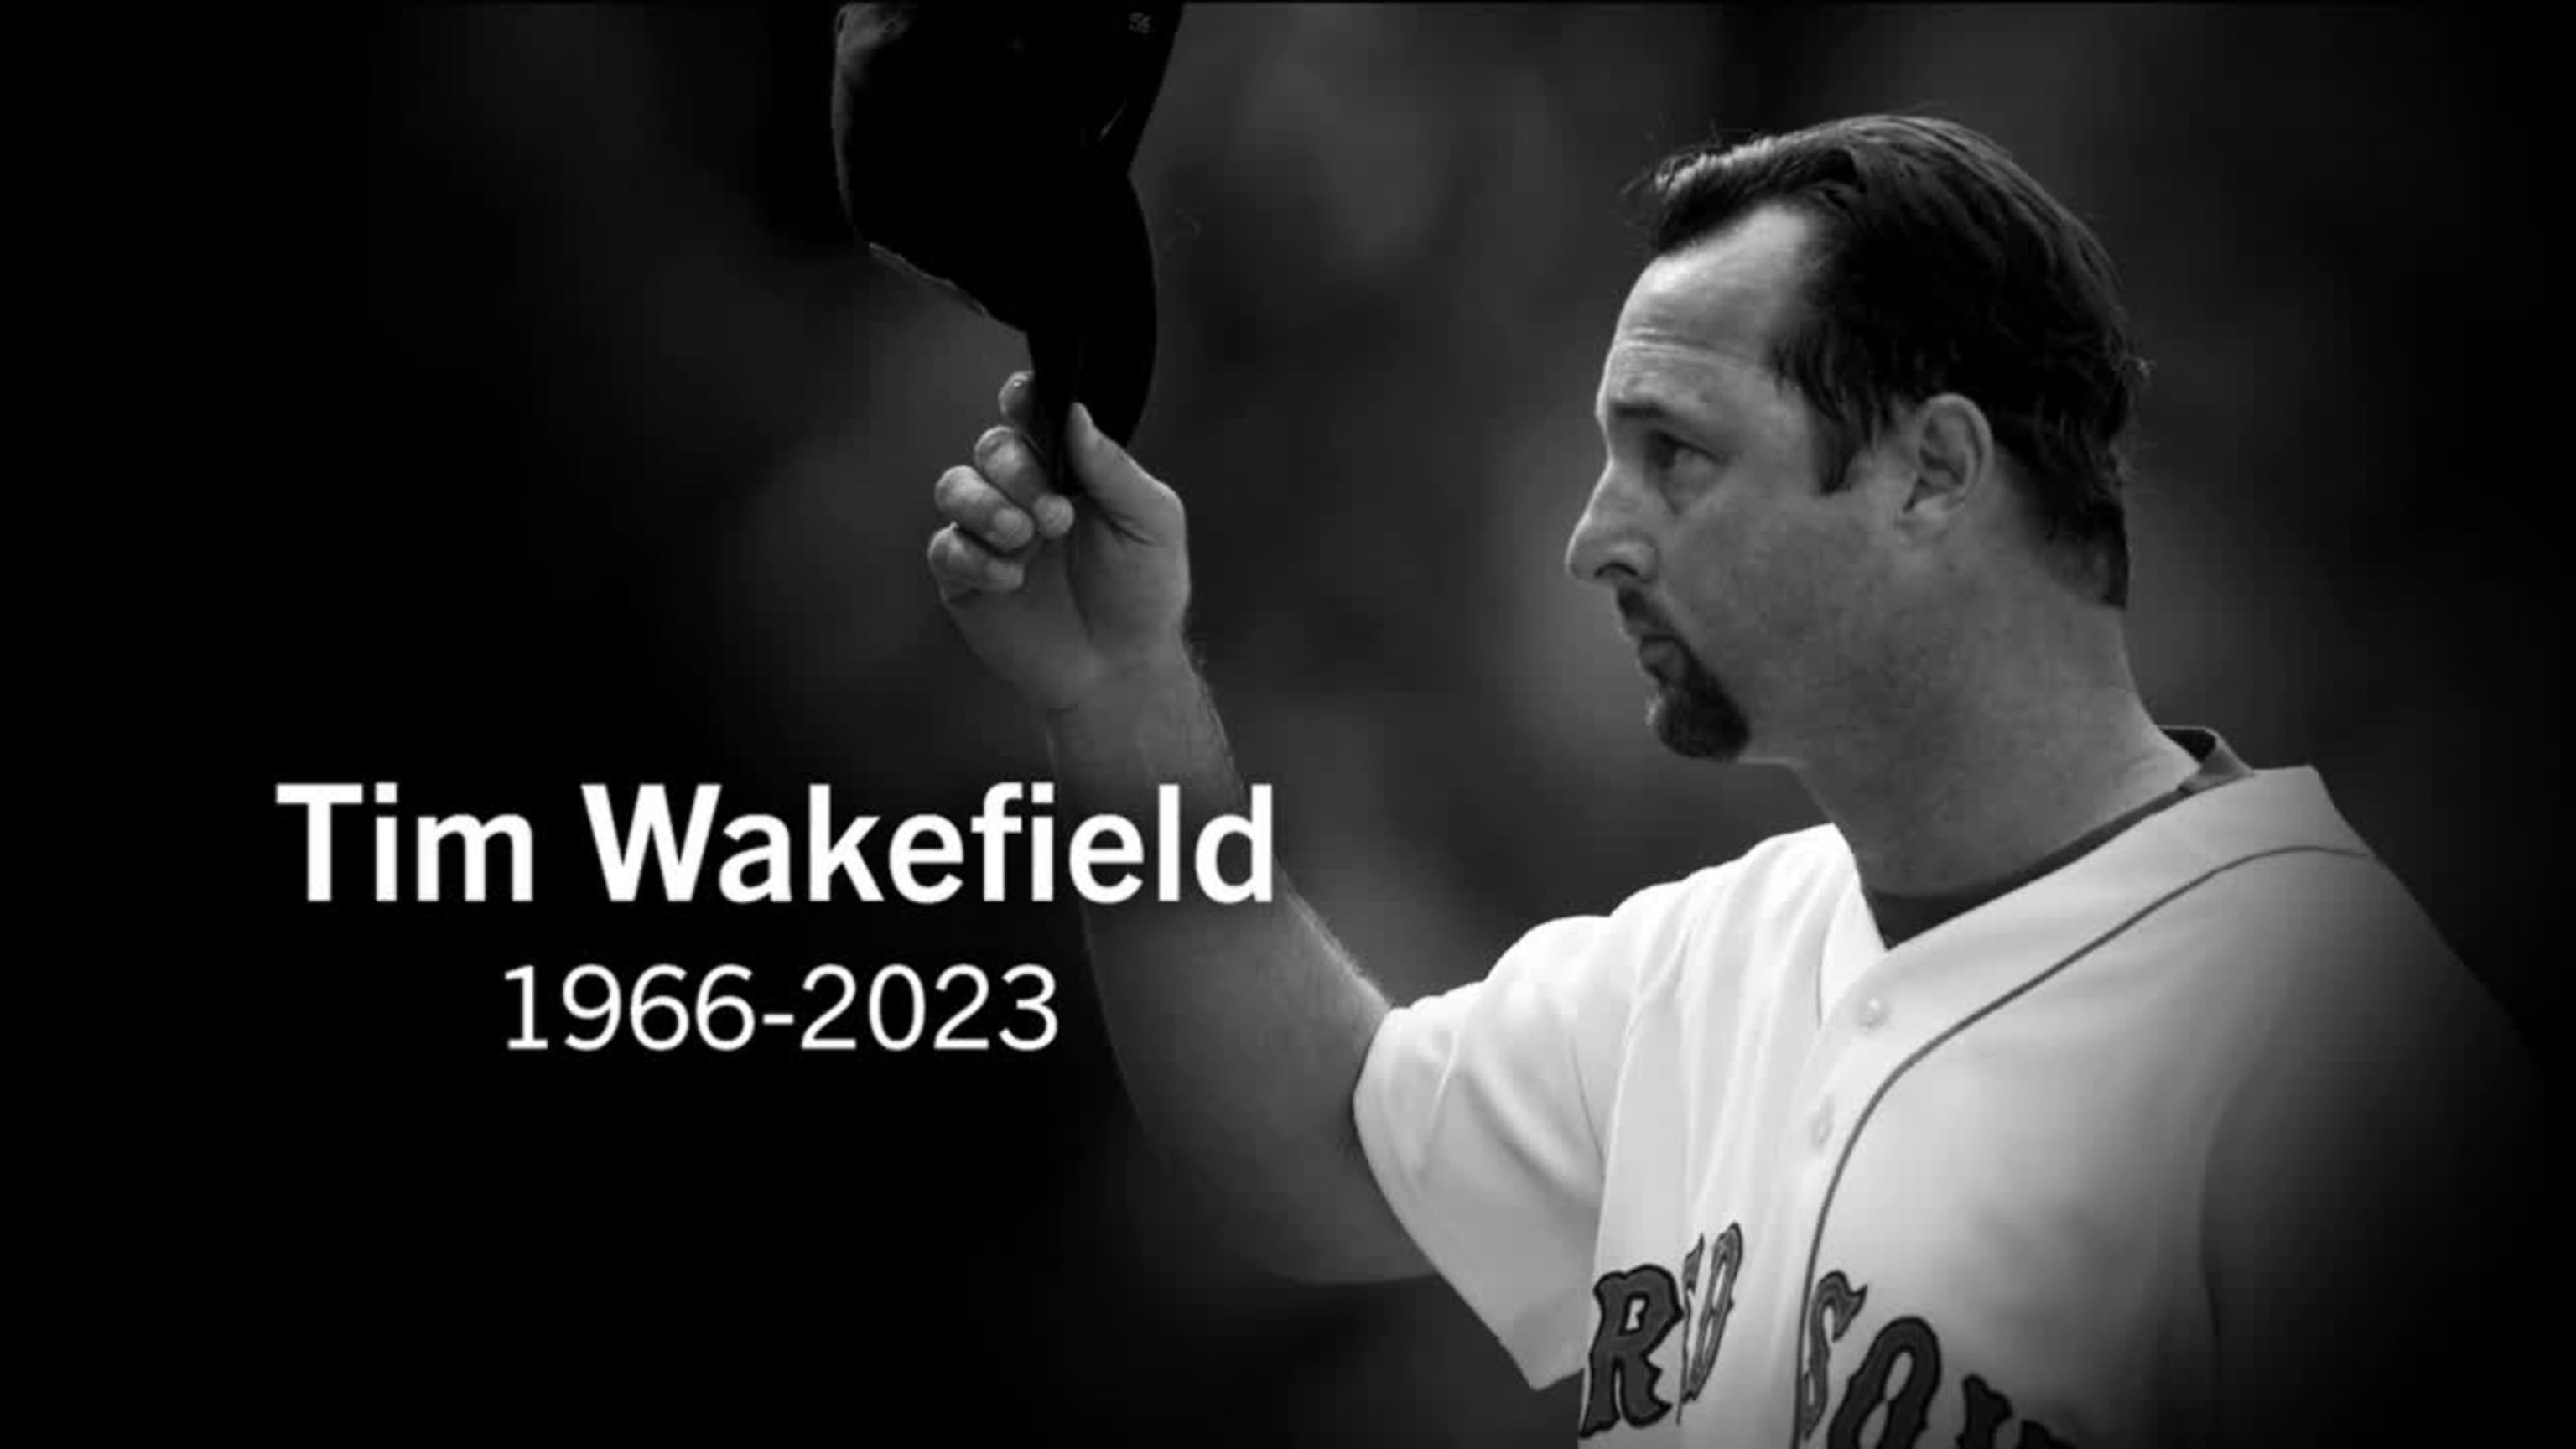 Share your favorite memories of Tim Wakefield - The Boston Globe